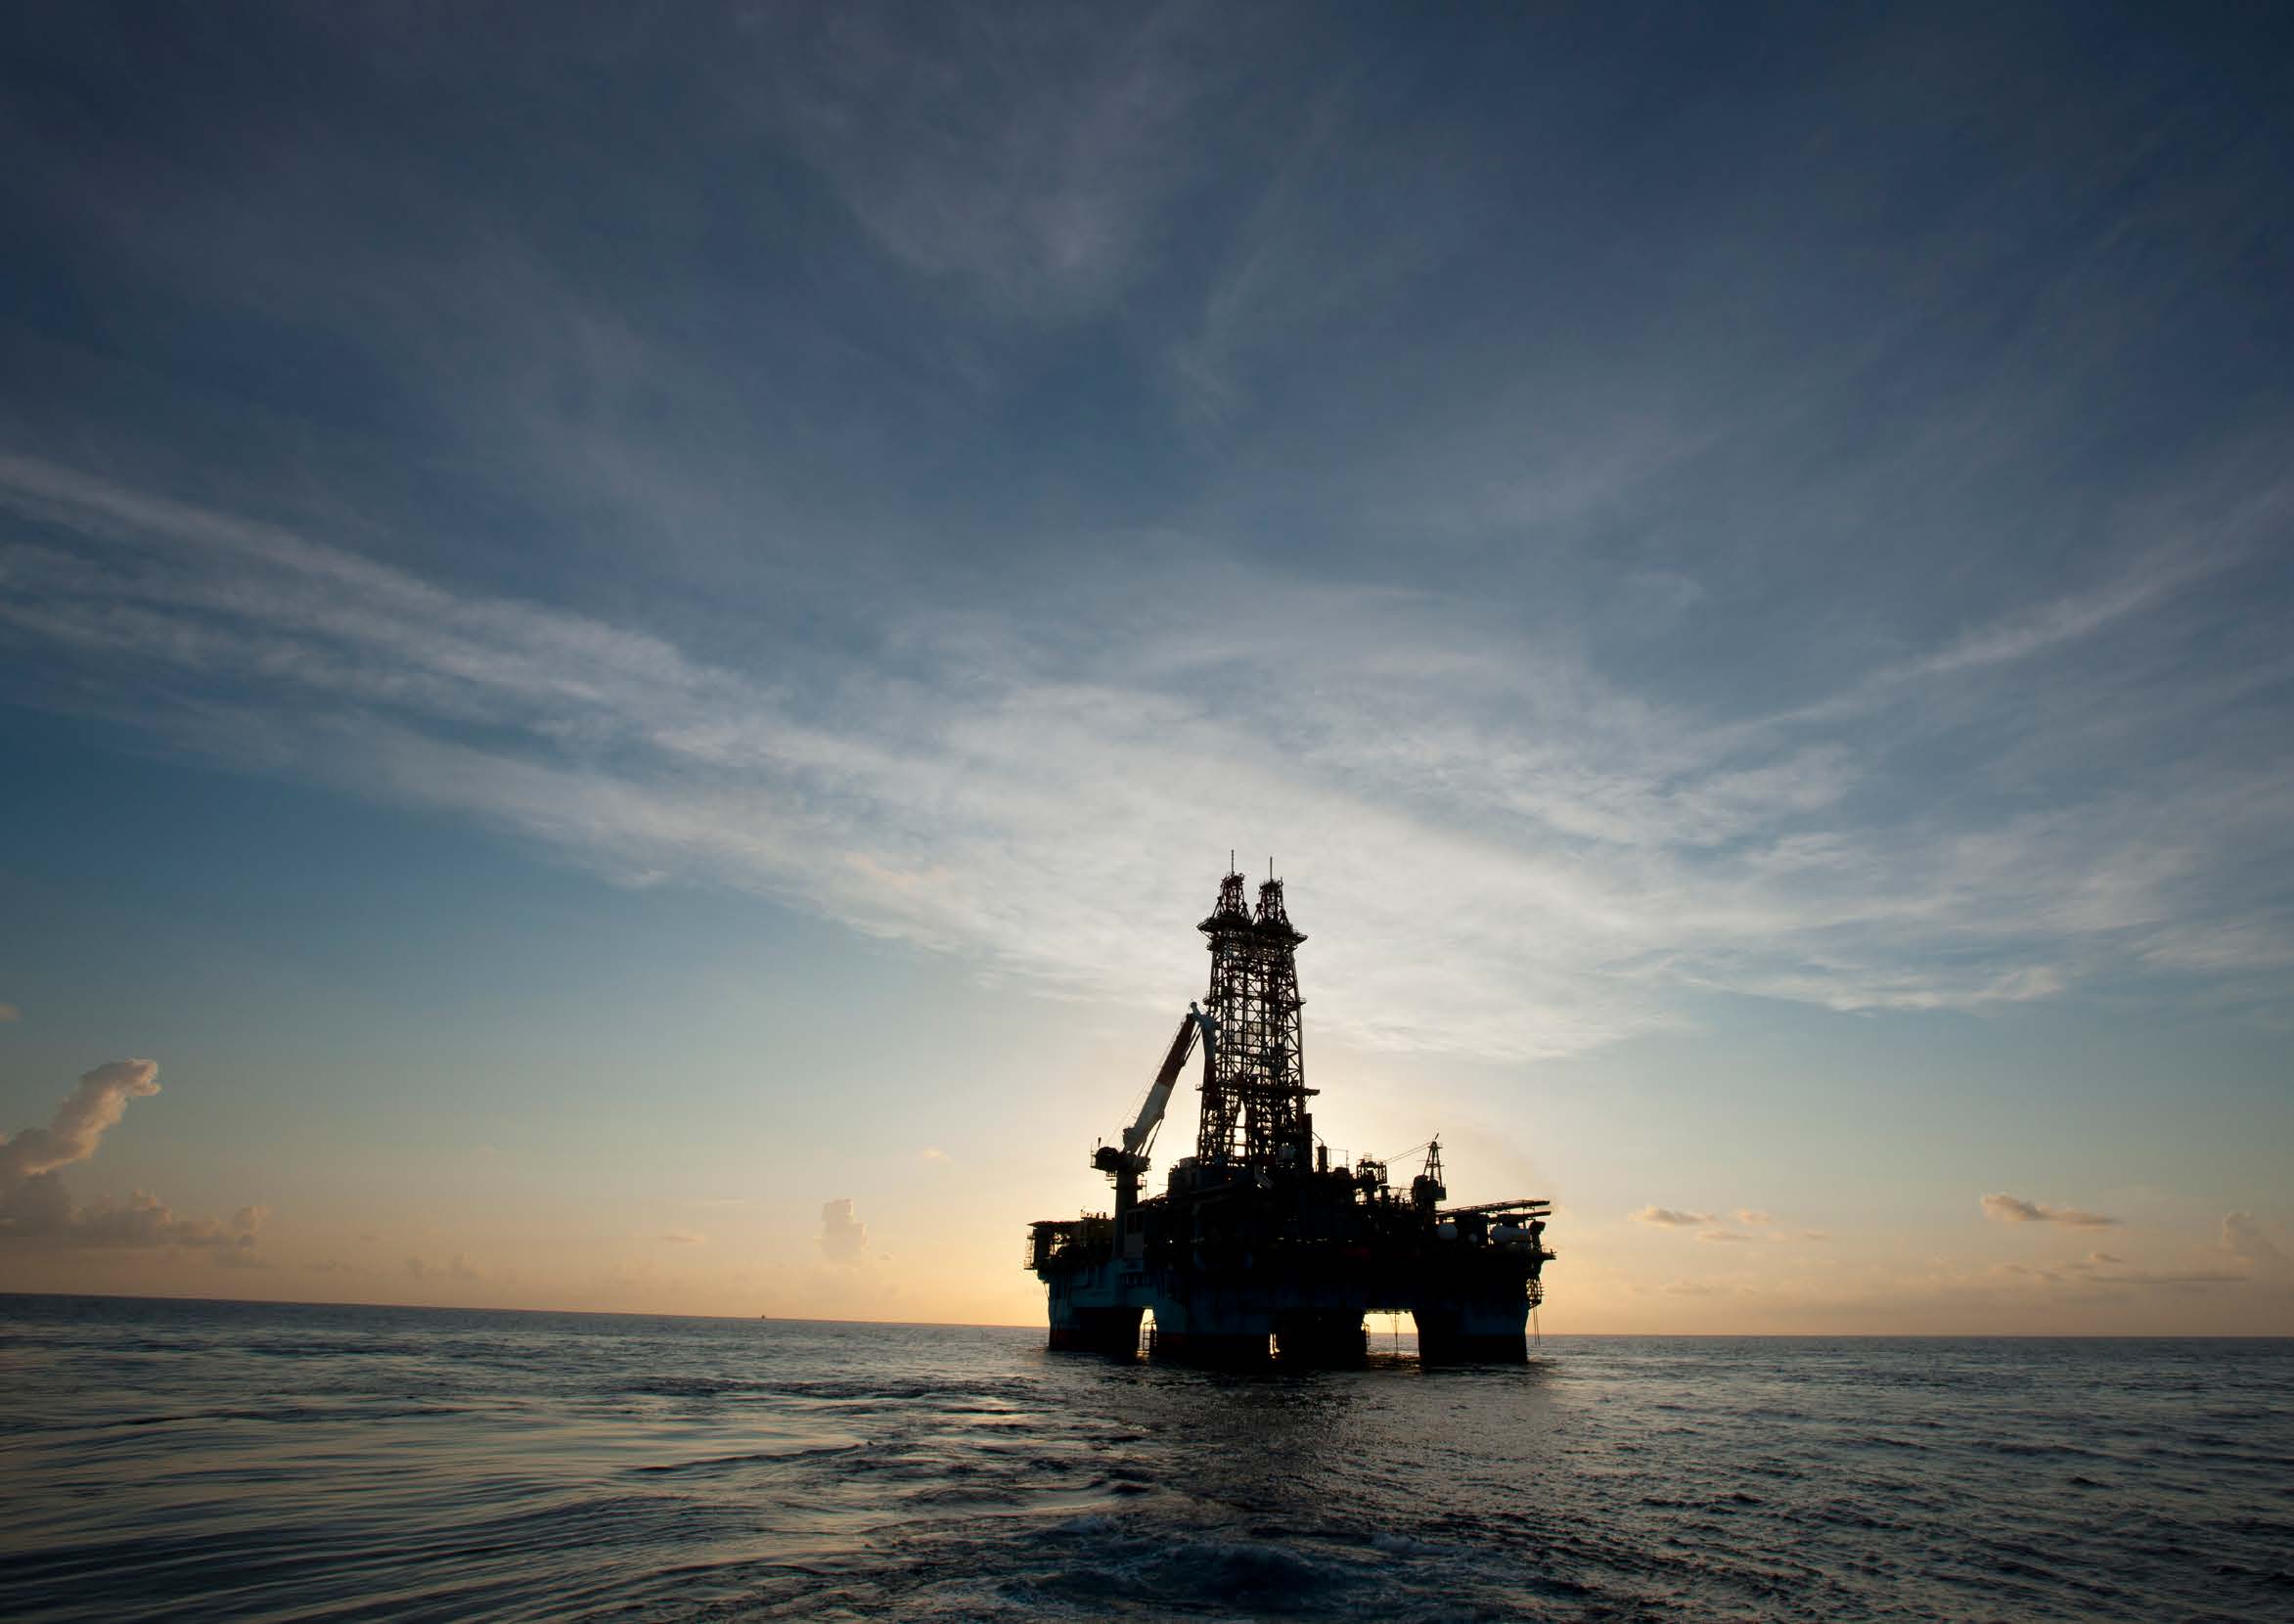 Maersk Drilling rig